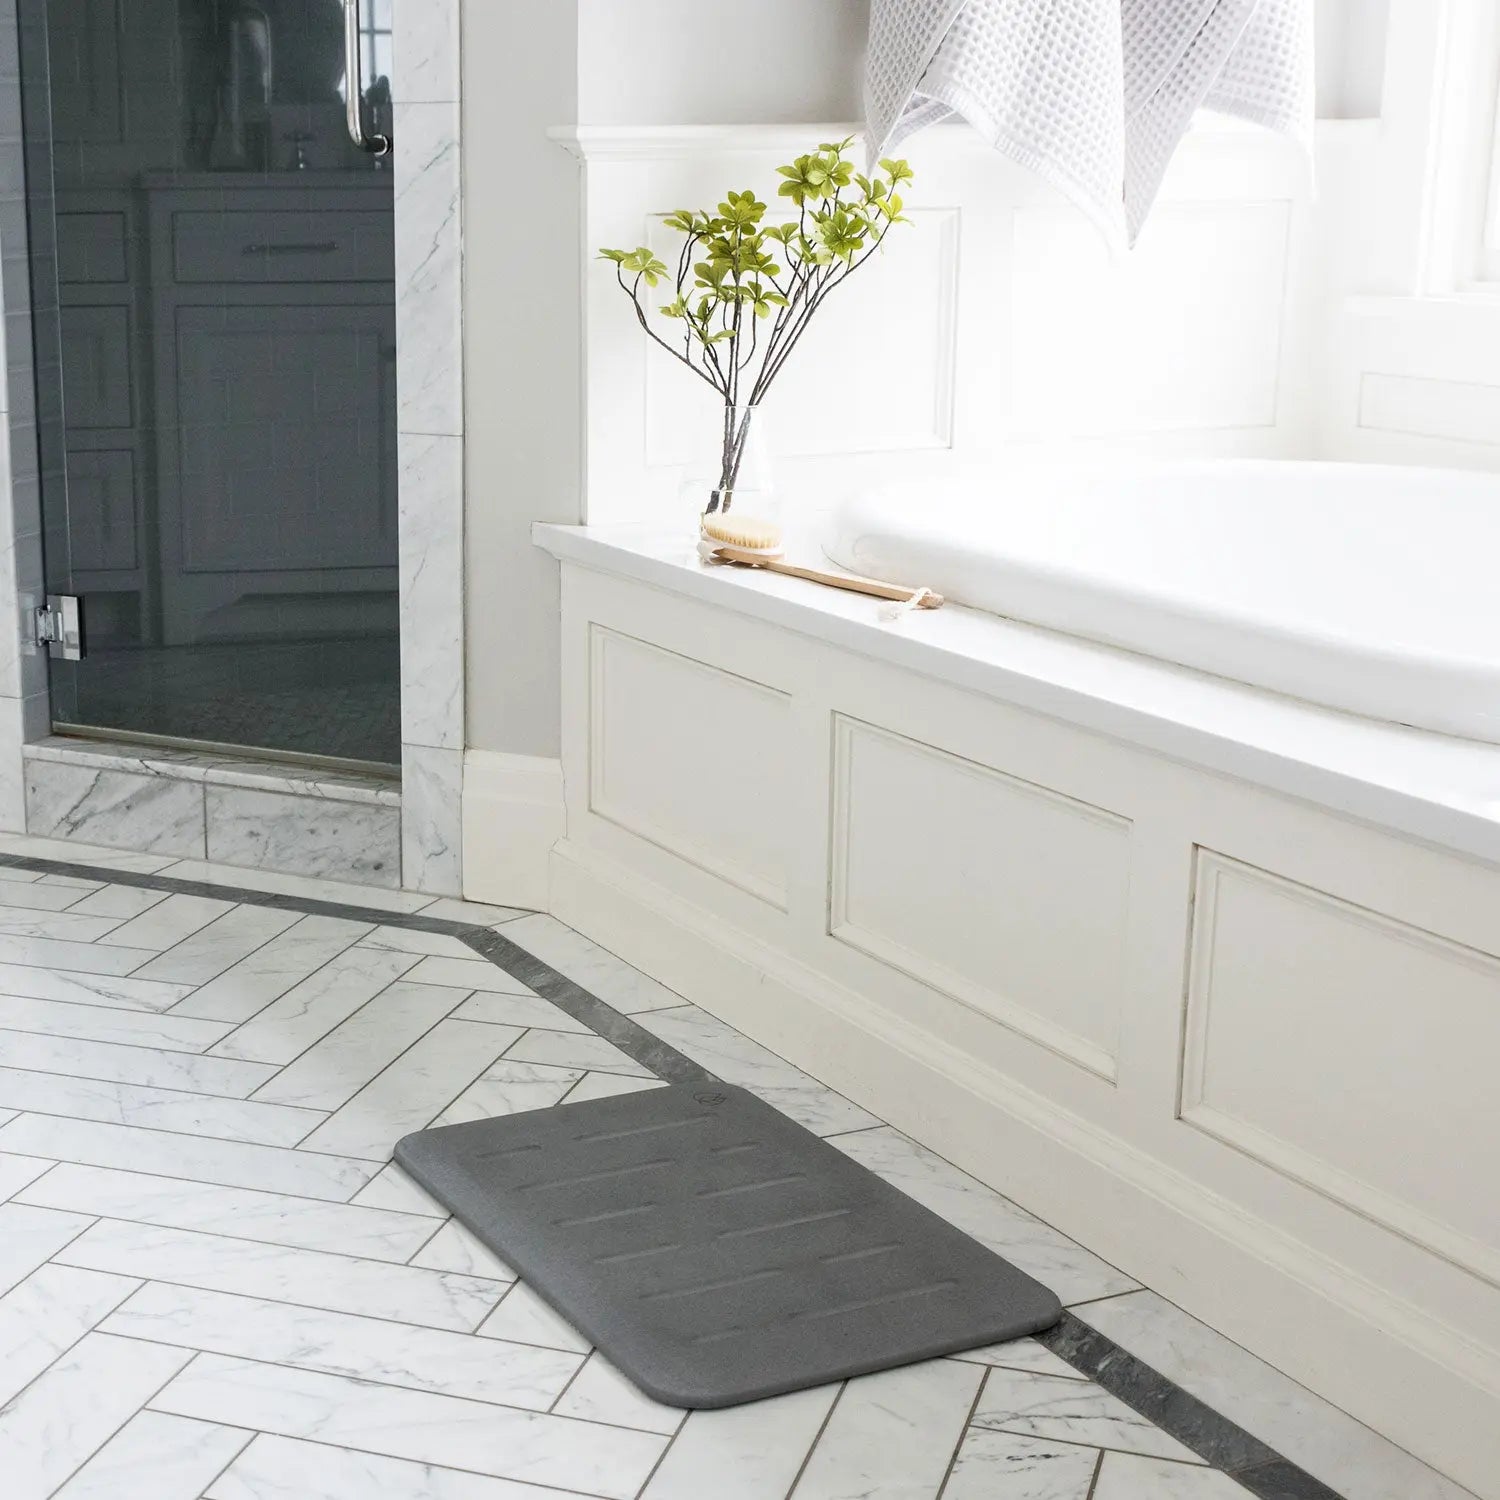 Dorai Home Bath Stone – Luxury Diatomite Stone Bath Mat – Instantly Removes Water – Non-Slip Surface – Modern and Stylish Design – Zen Sandstone